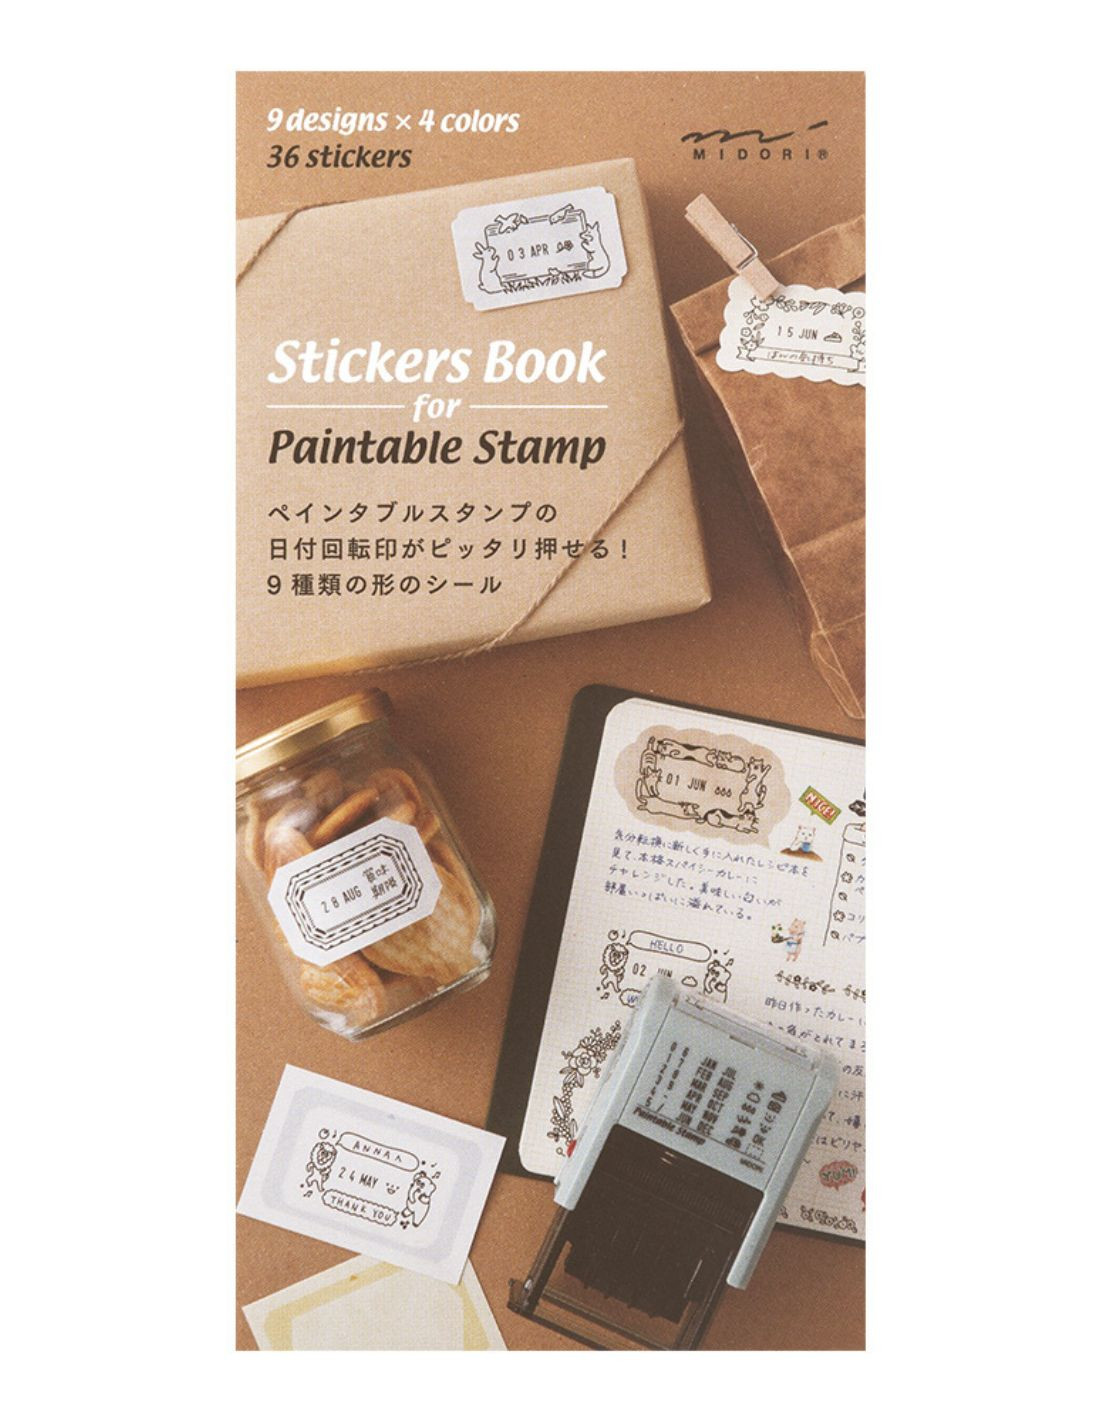 Stickers Book pour Paintable Stamp rotatif - Couleurs Naturelles - Midori